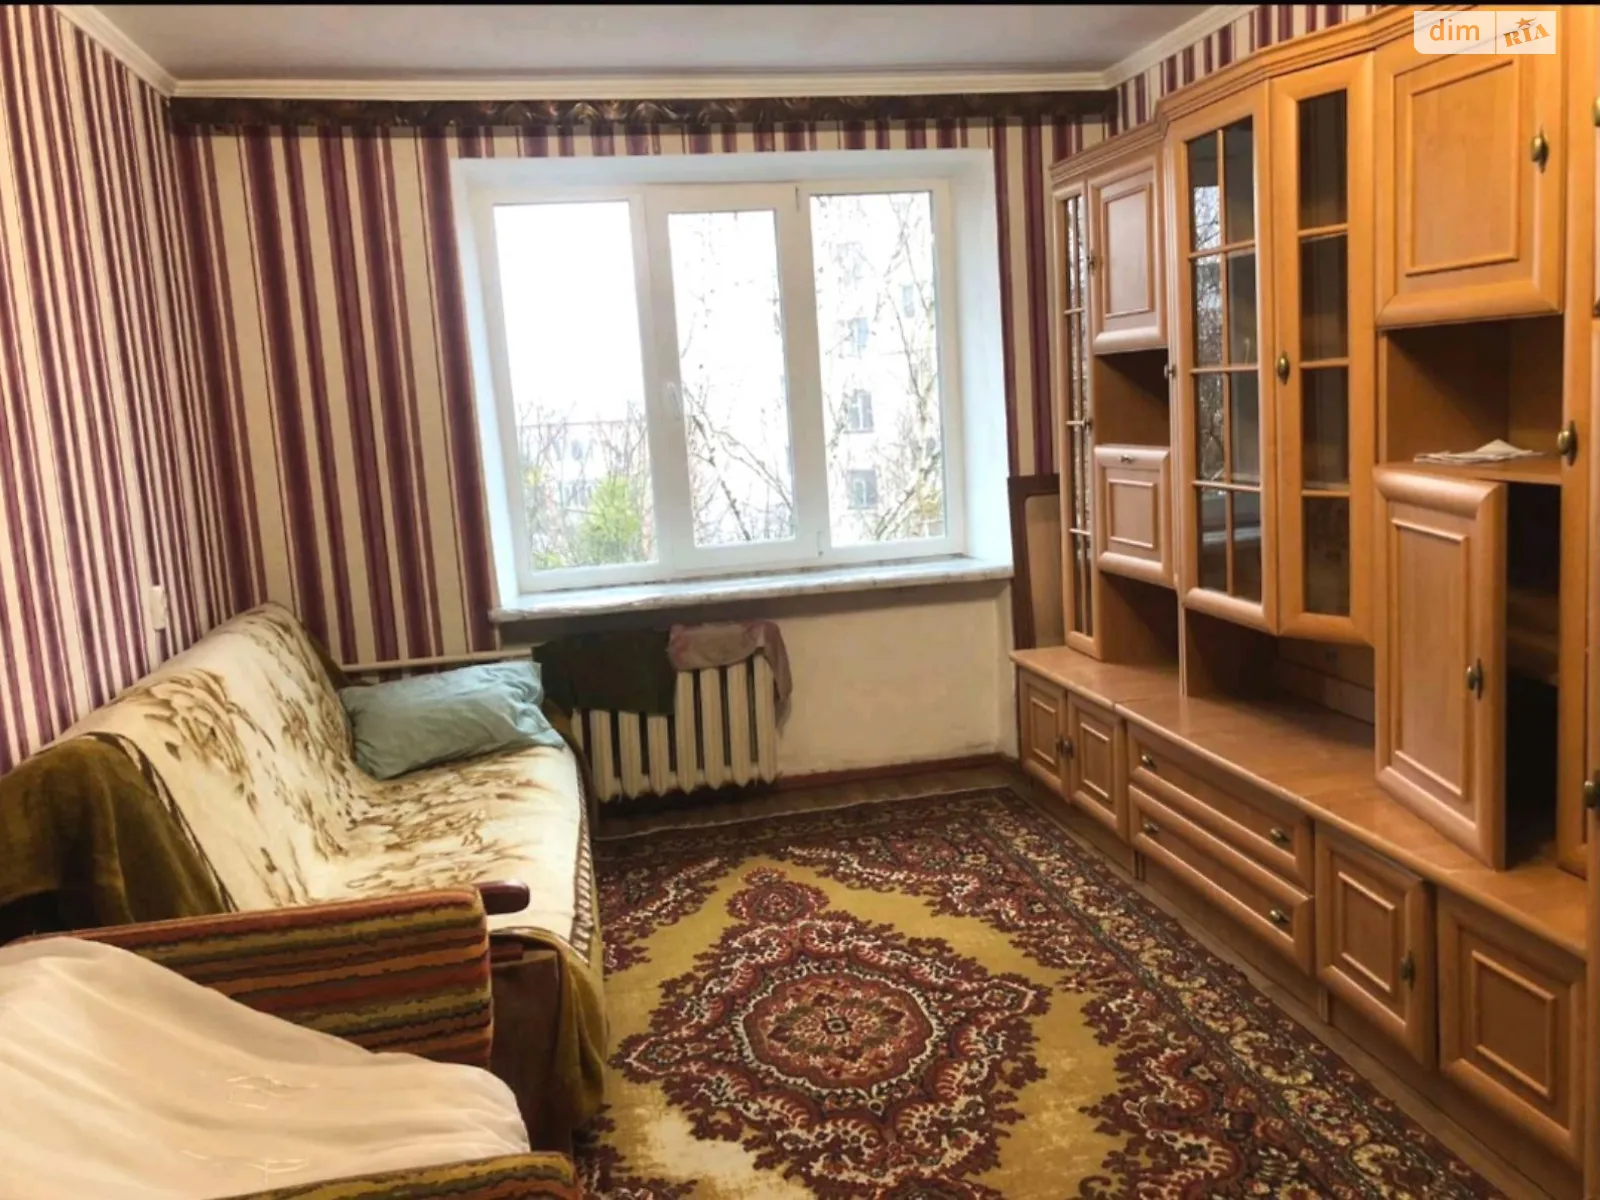 Продается комната 30 кв. м в Ровно, цена: 11800 $